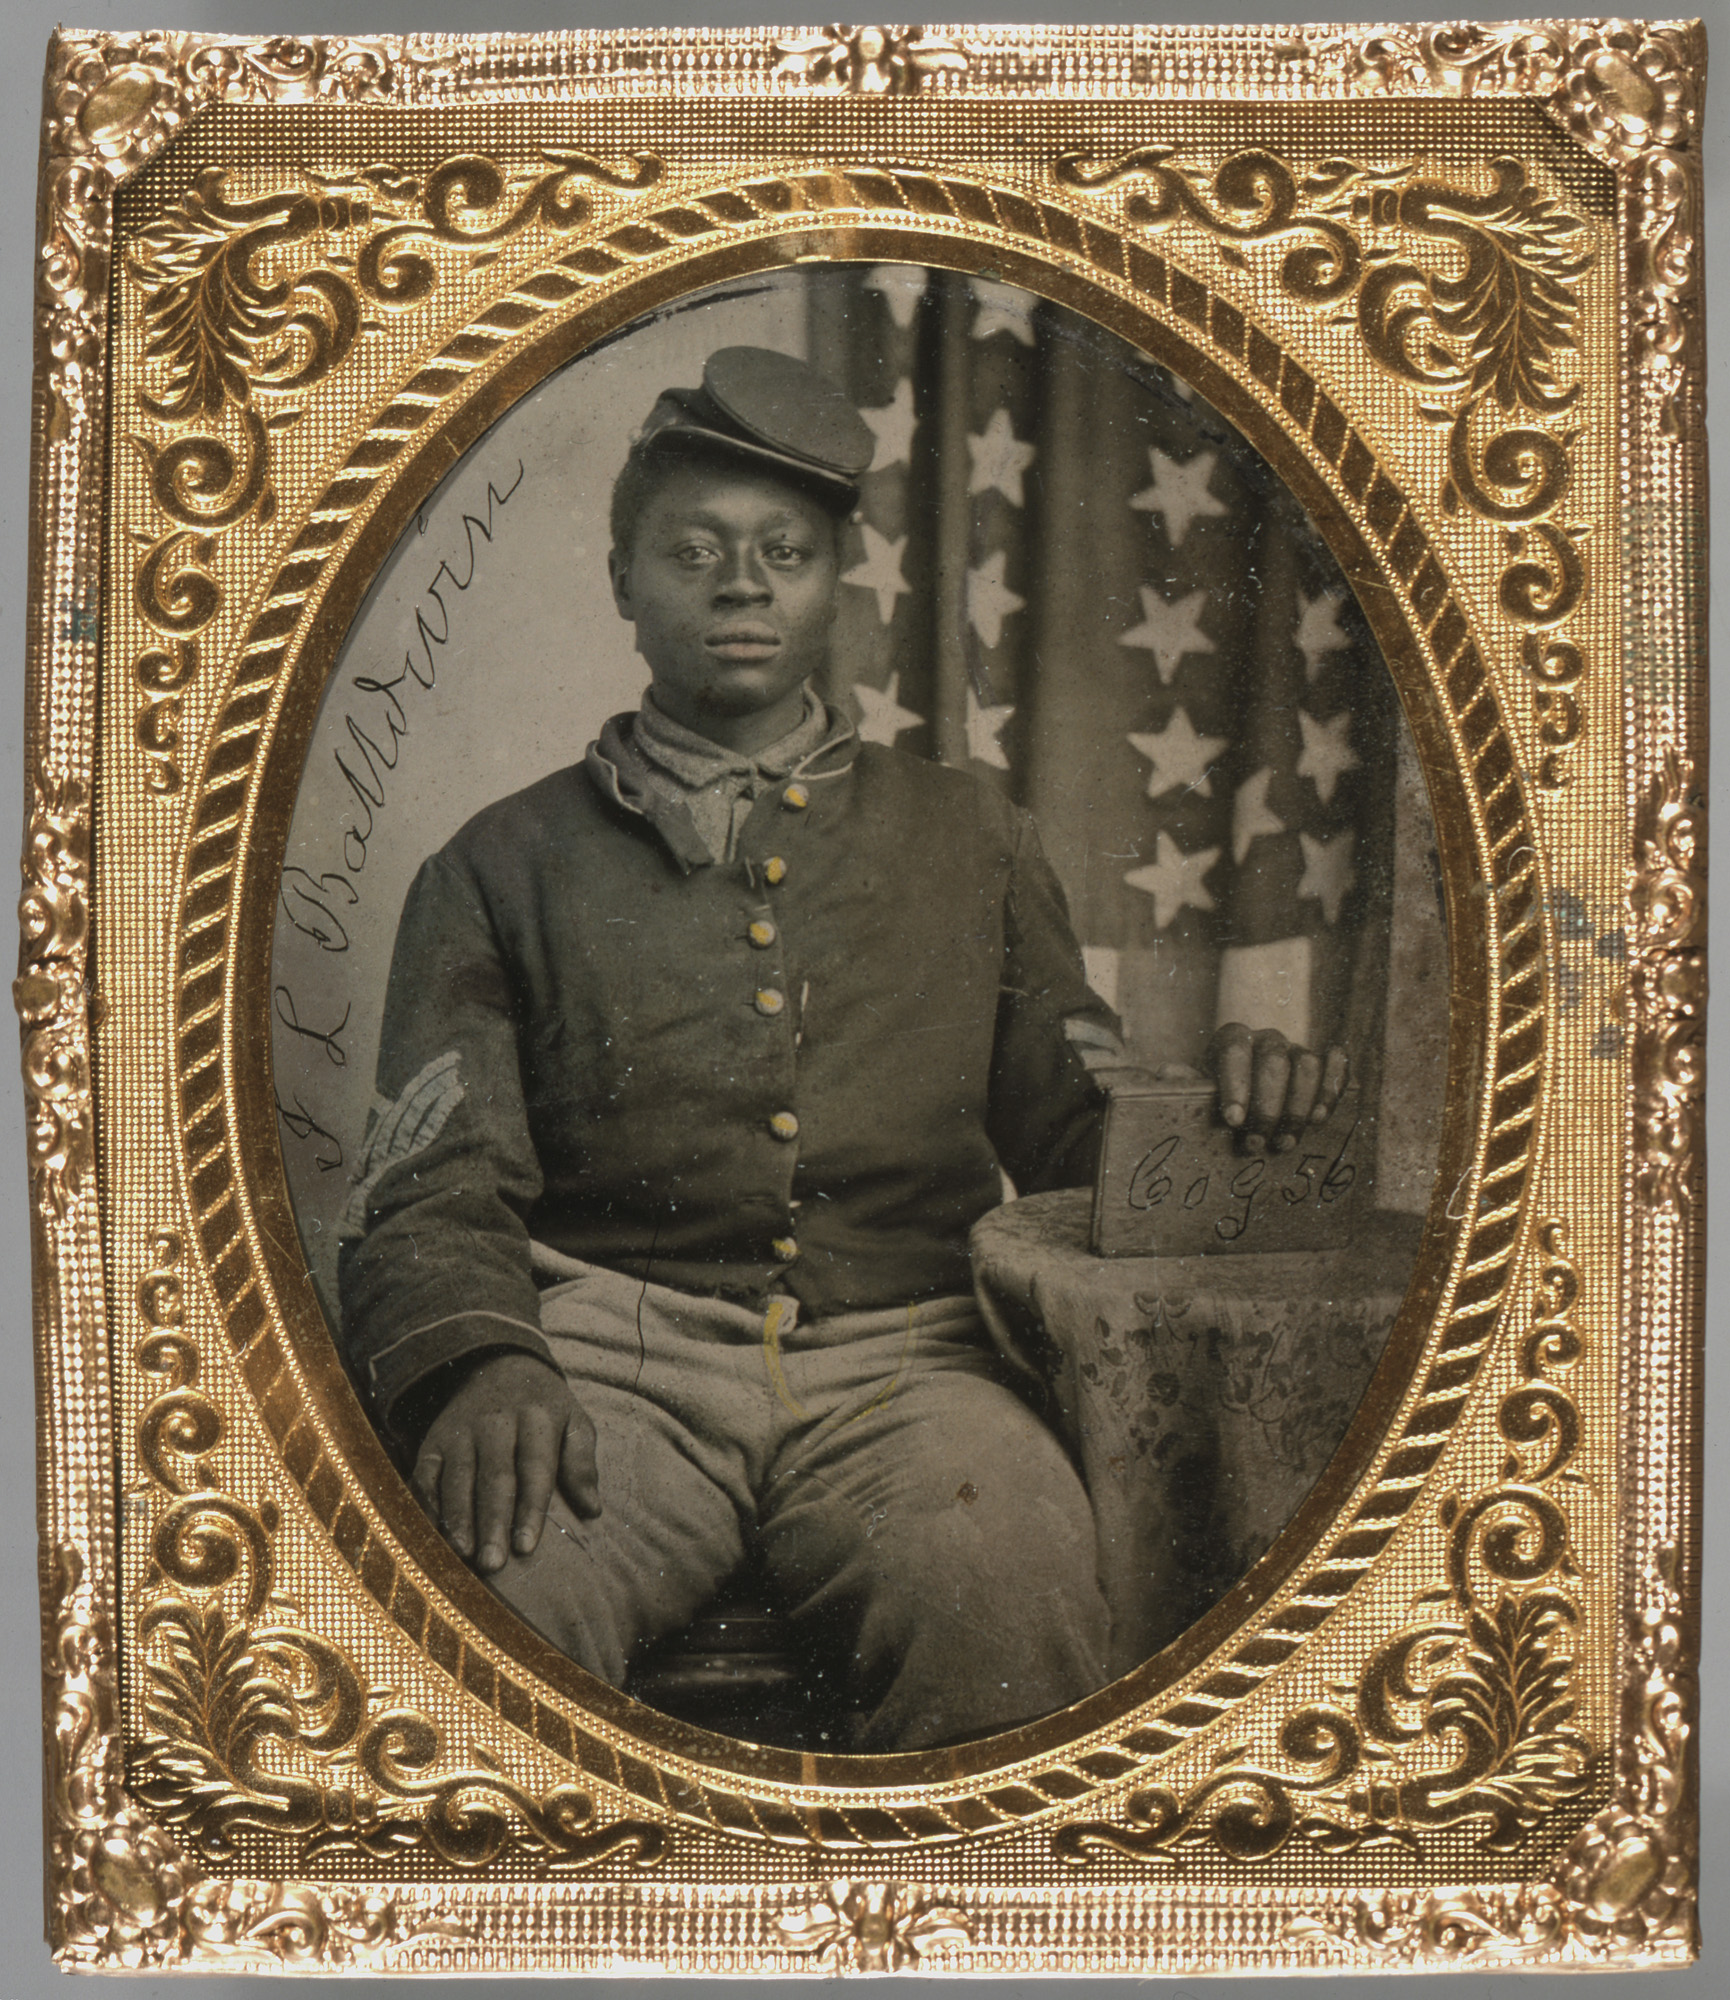 Tintype of Black Union Soldier, J. L. Balldwin, c. 1863 (Chicago History Museum)